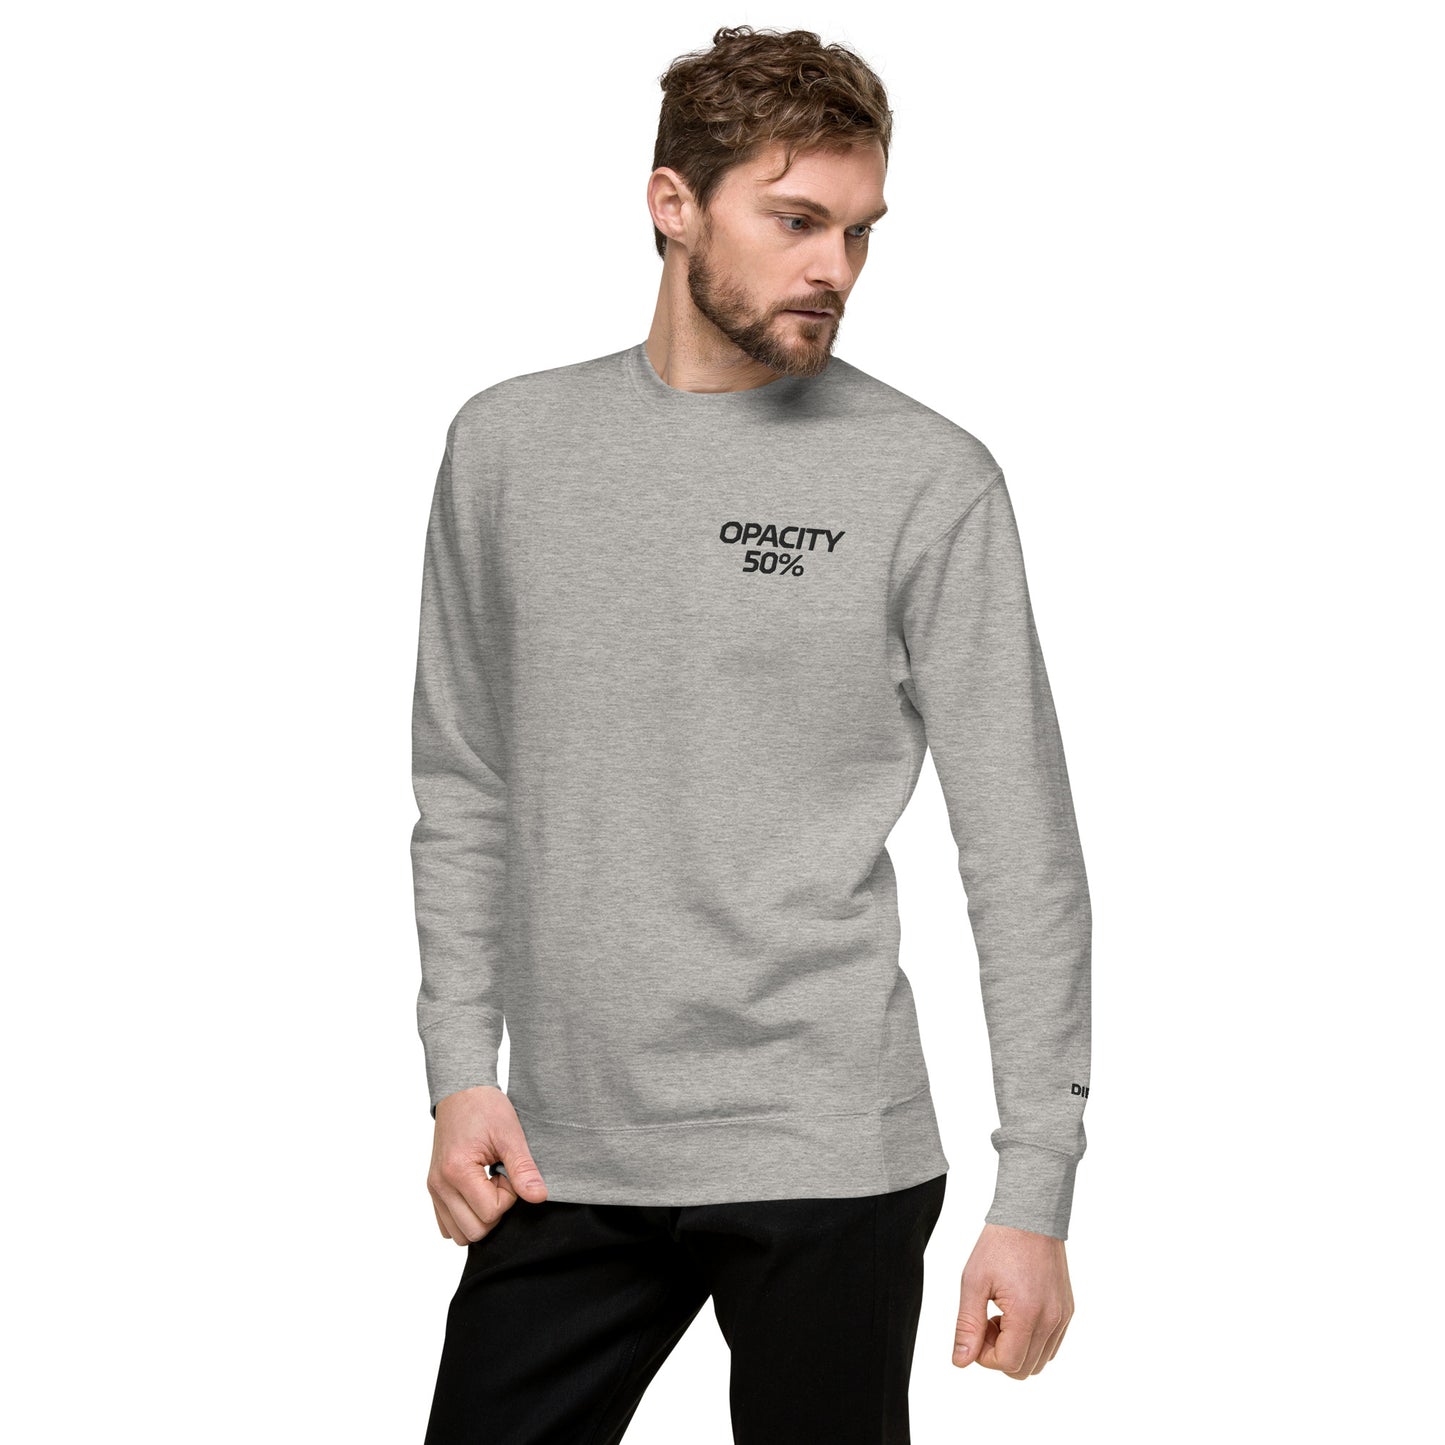 Opacity 50% Embroidered Unisex Premium Sweatshirt